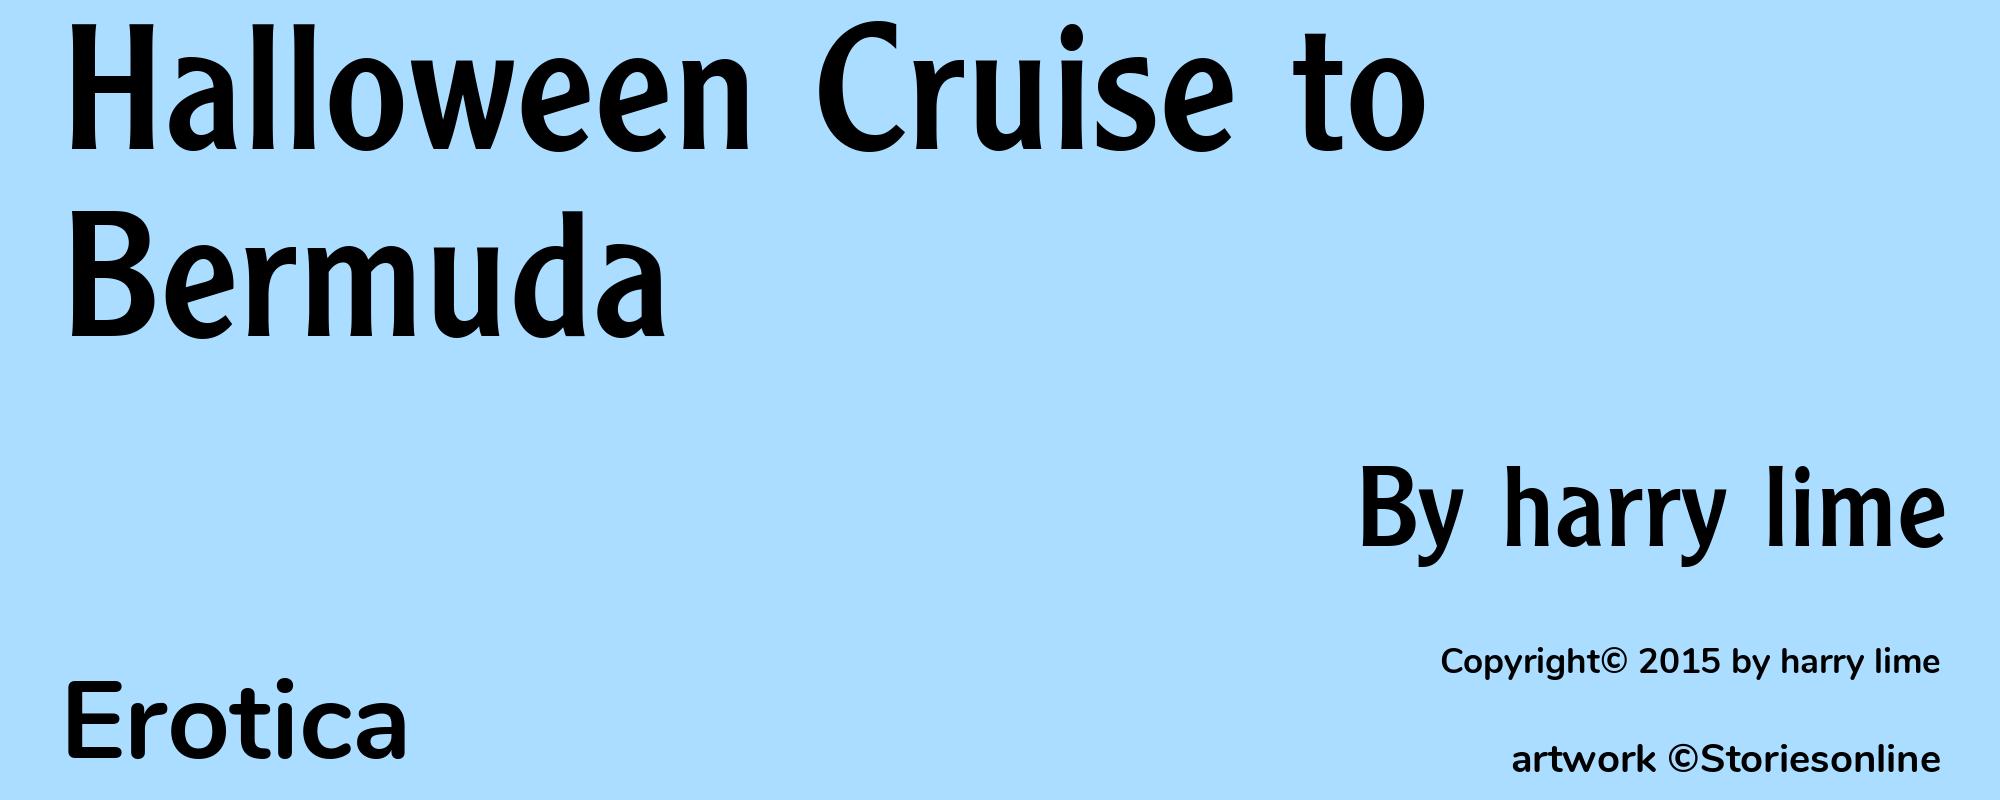 Halloween Cruise to Bermuda - Cover